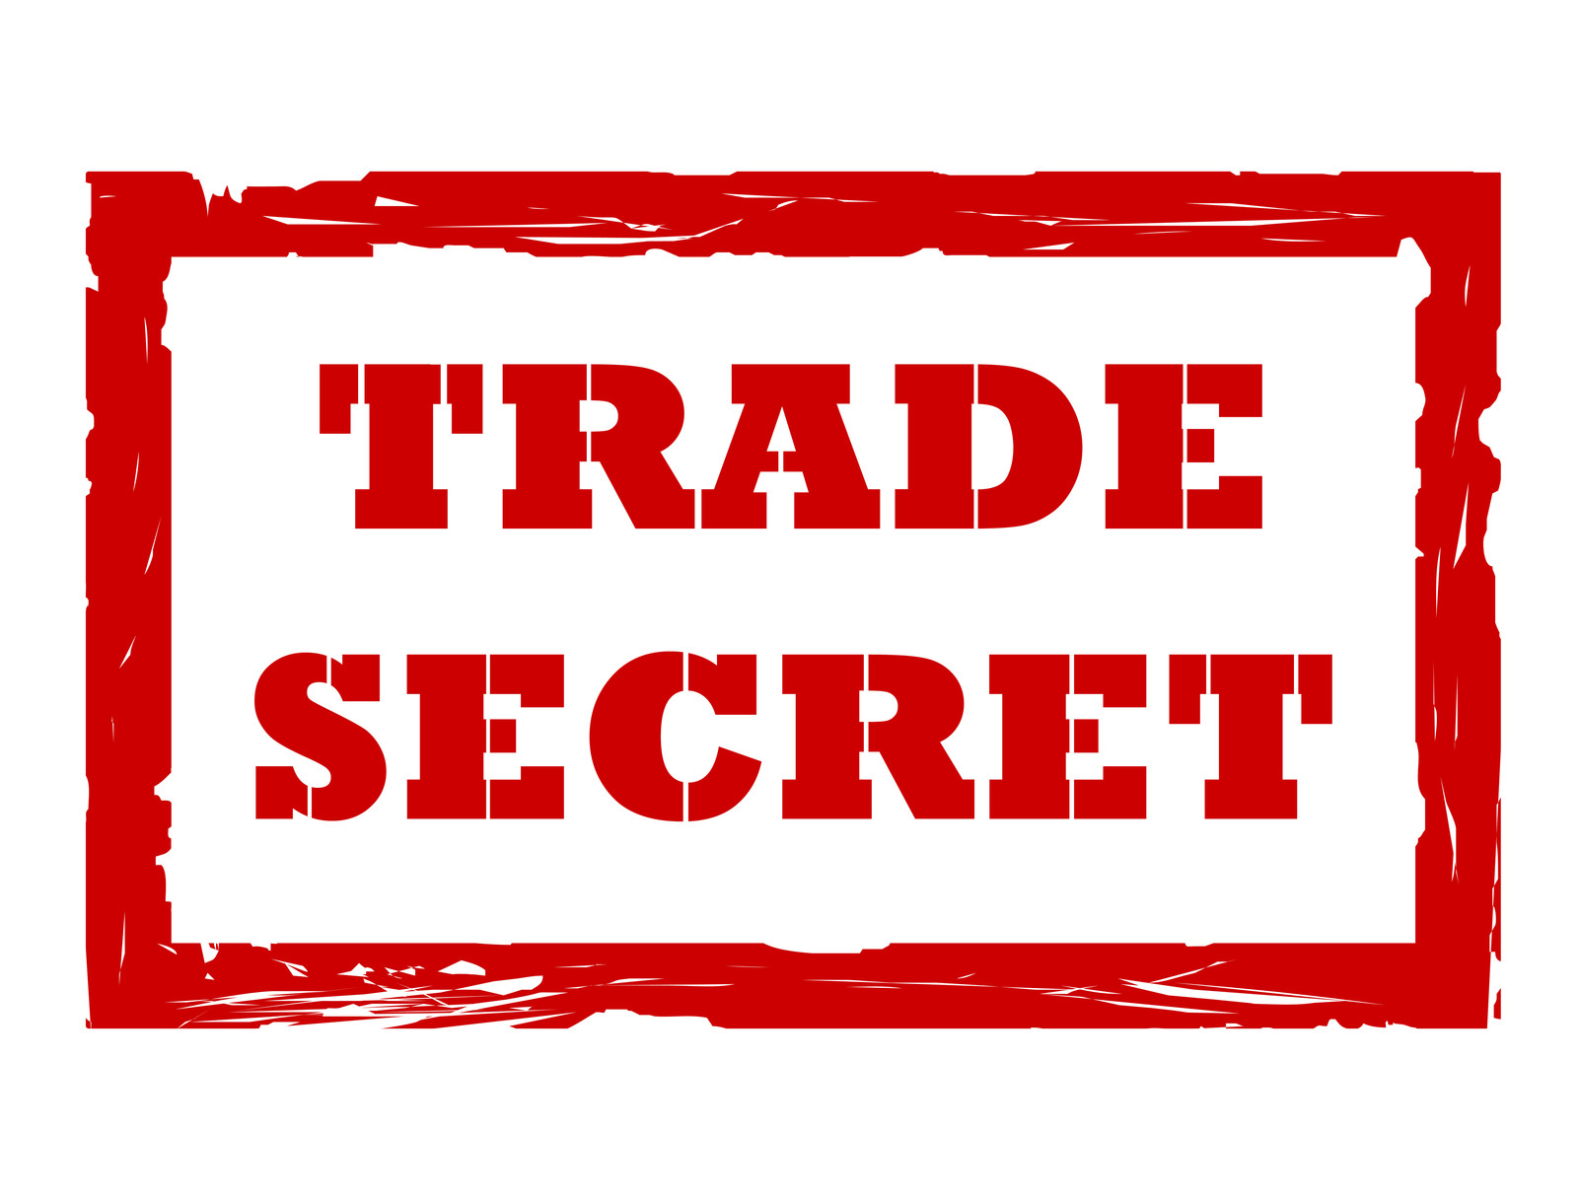 Trade Secrets in Italy